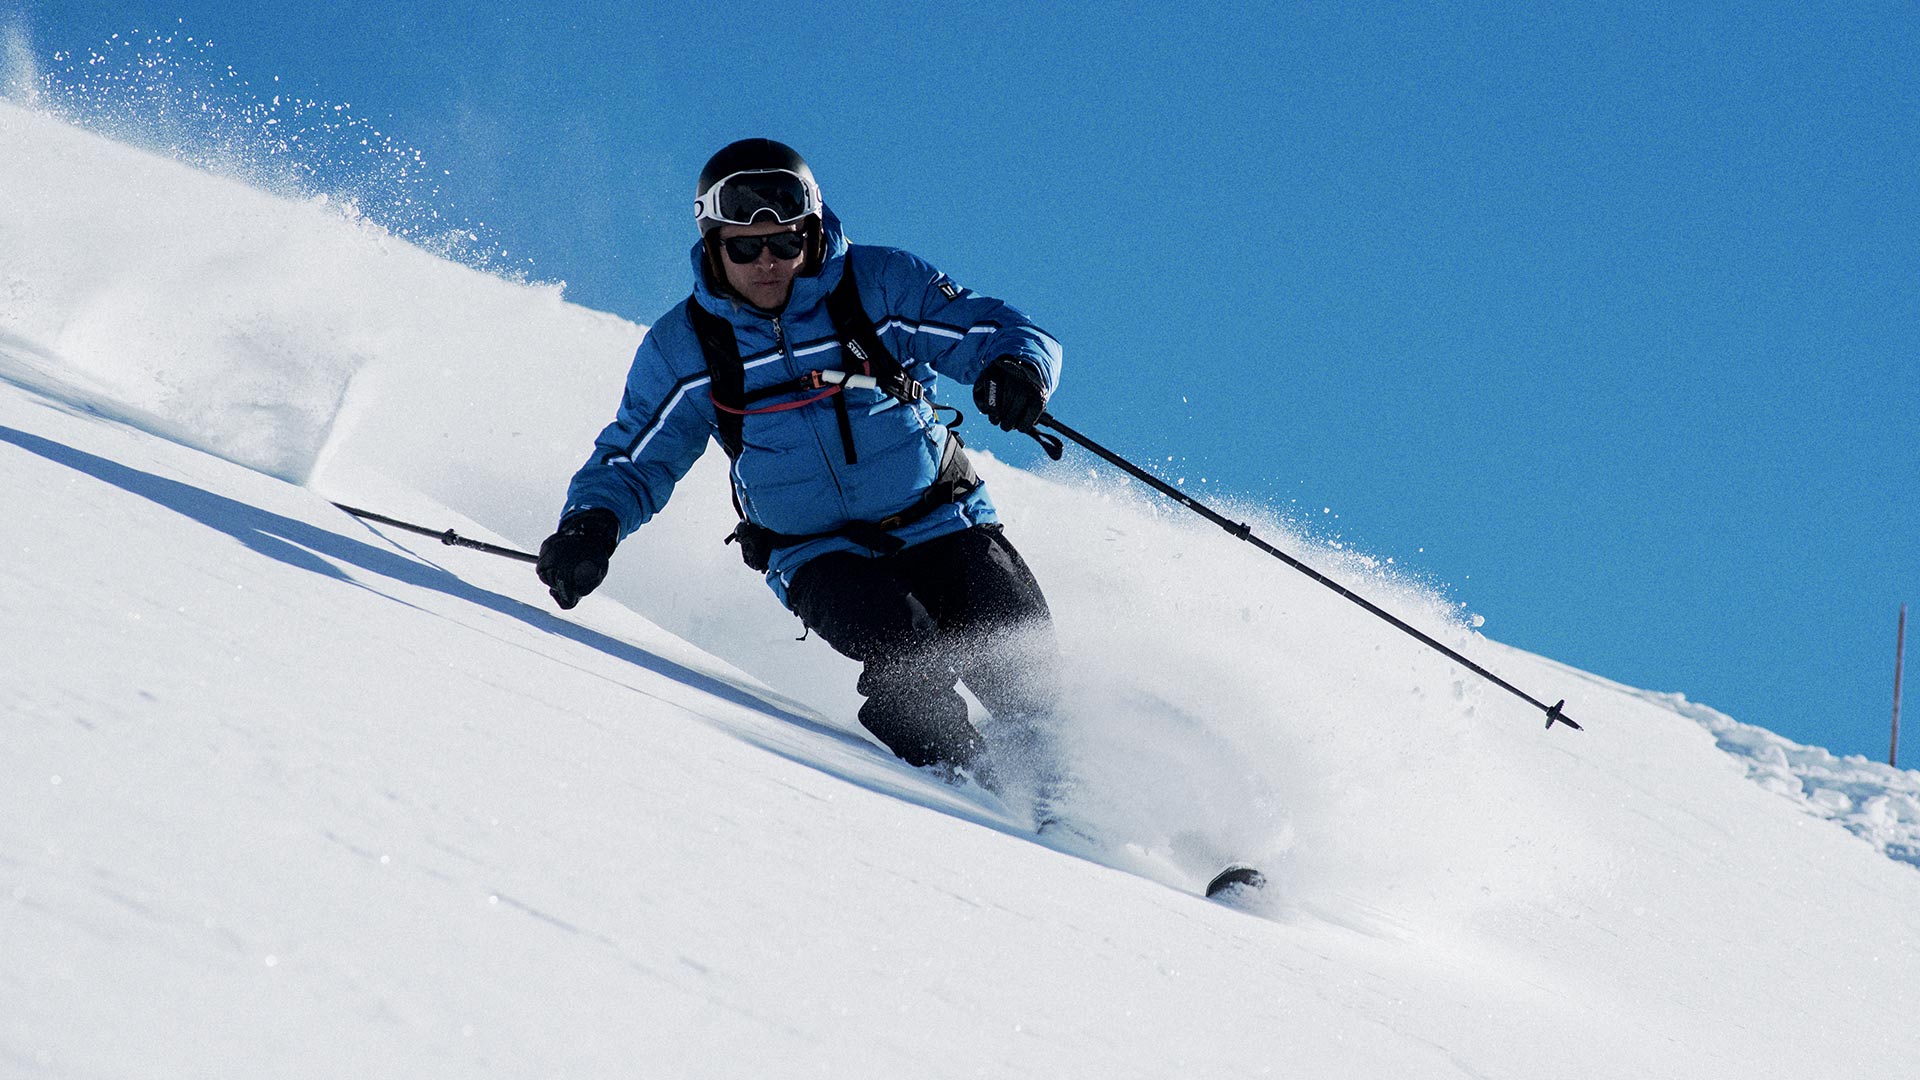 Physical Ski Benefits